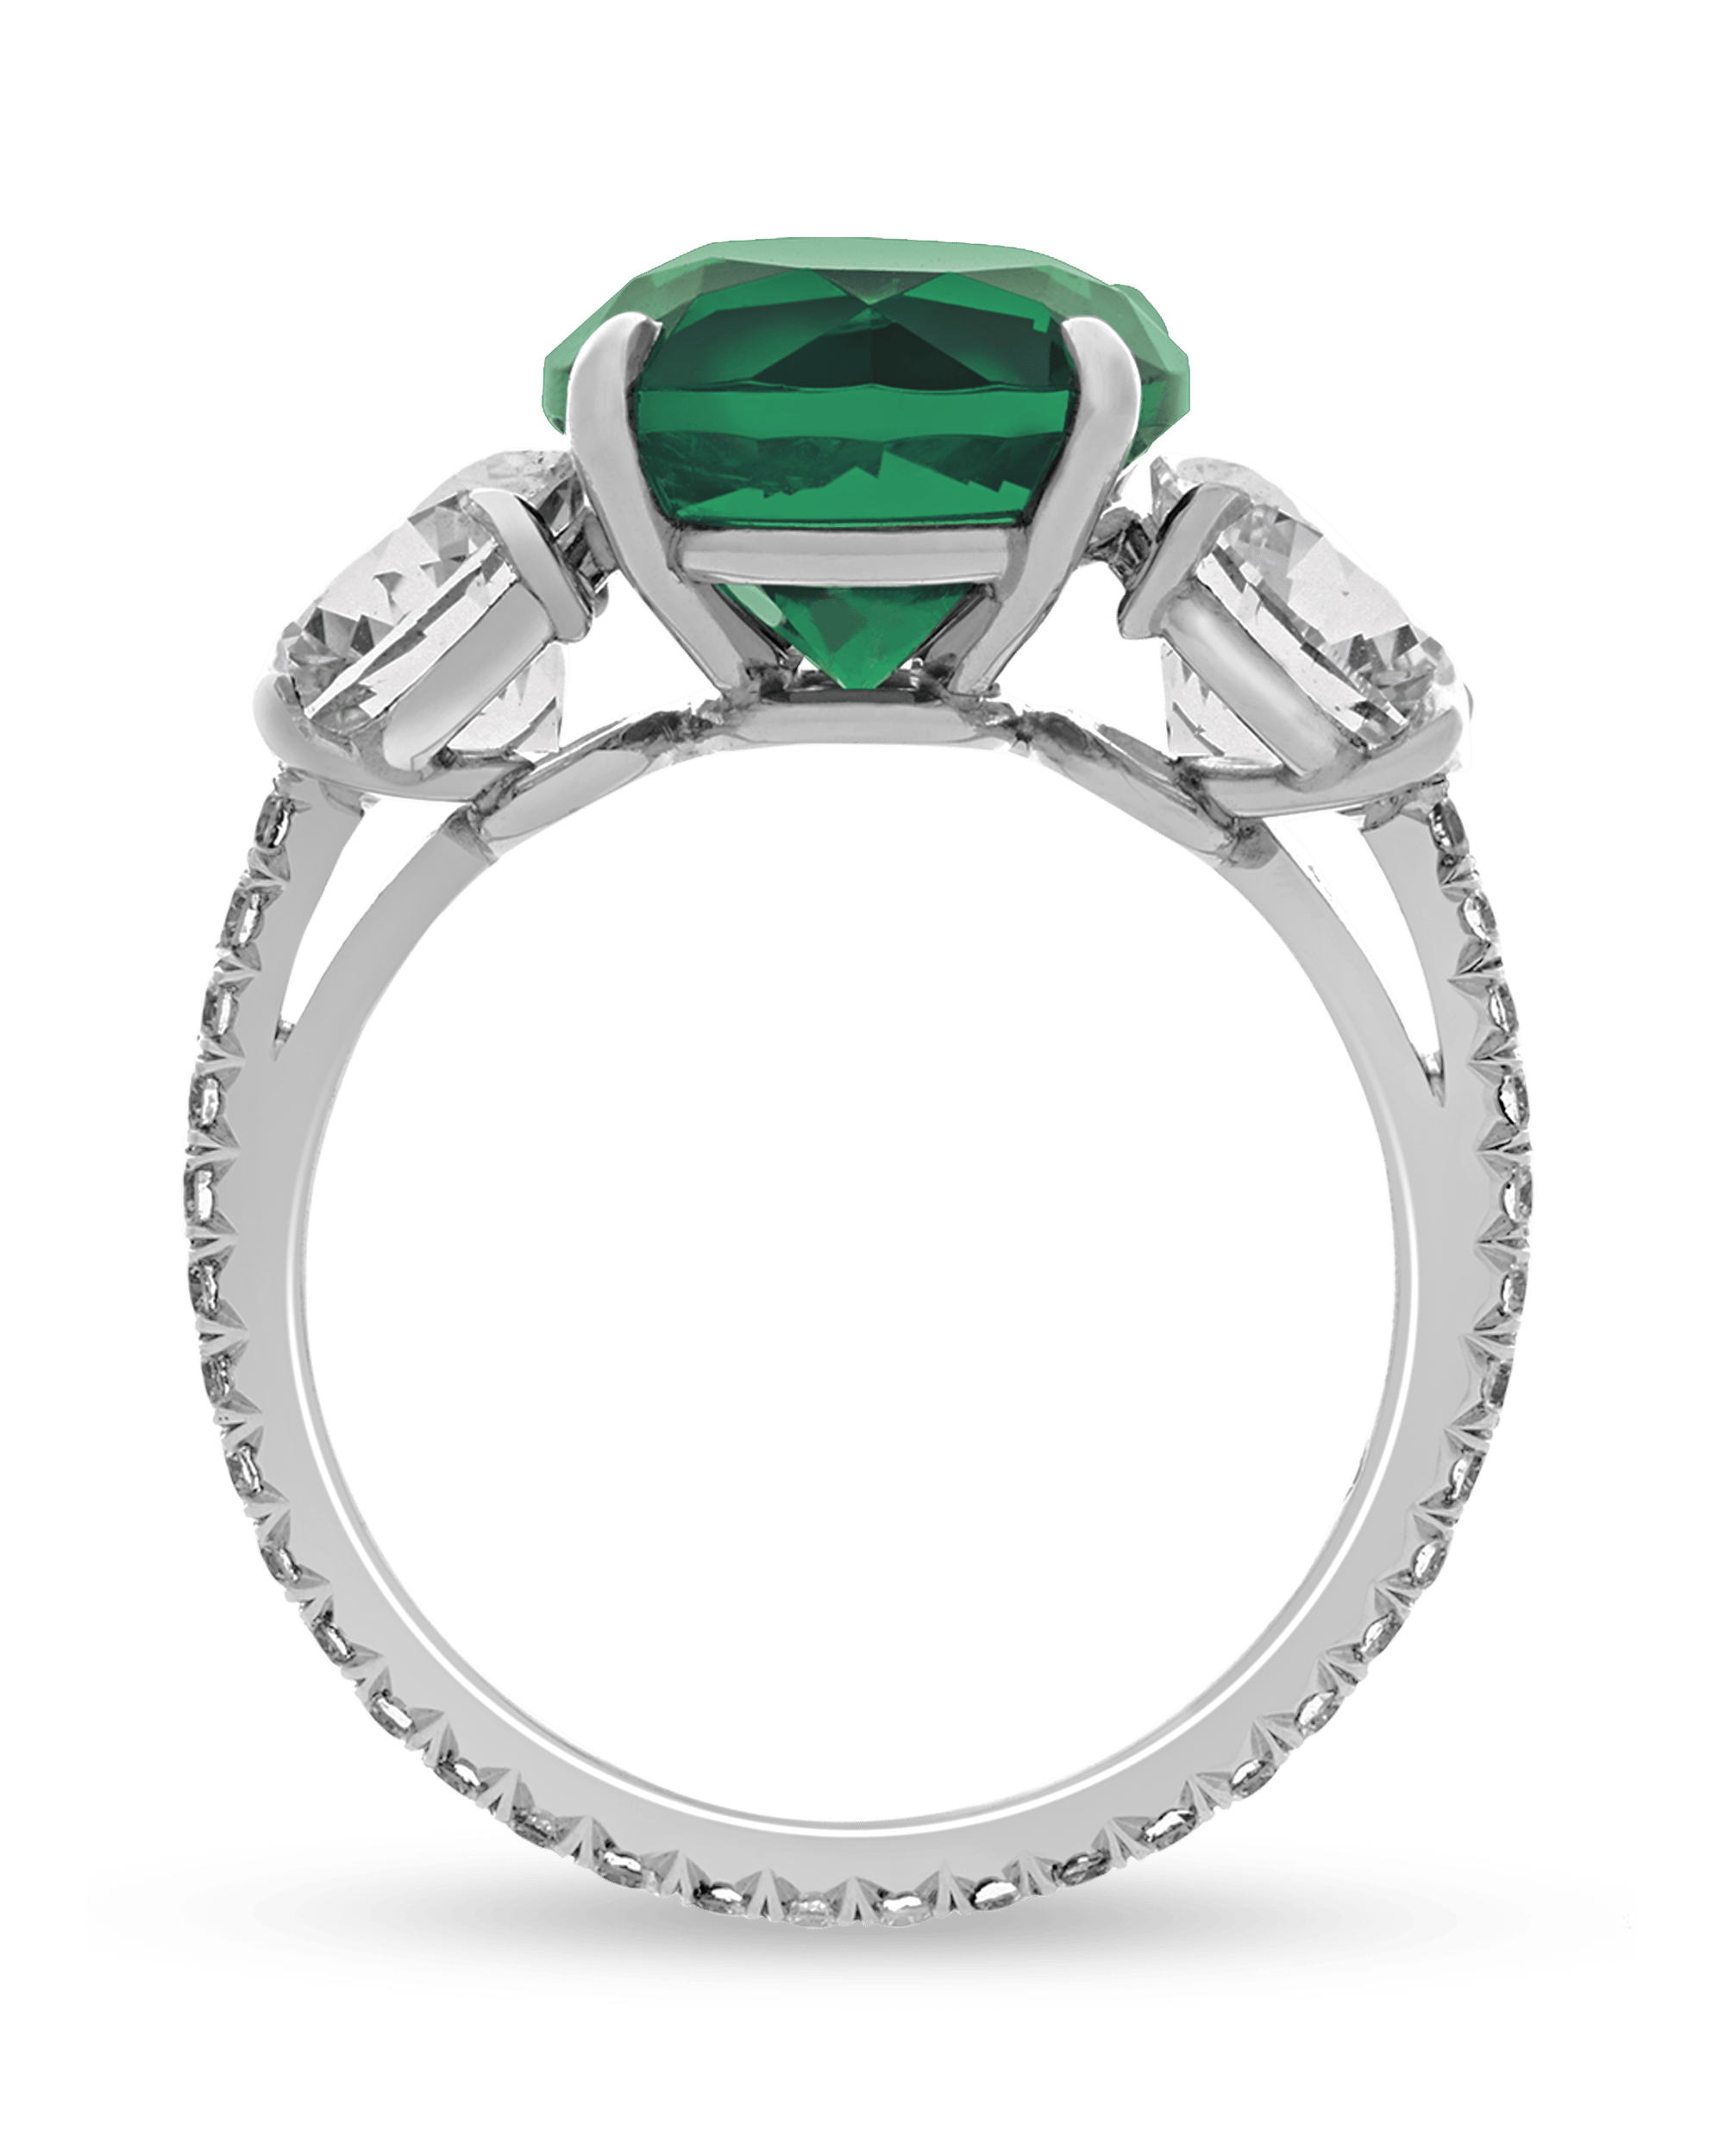 Zambian Emerald Ring, 3.49 Carats